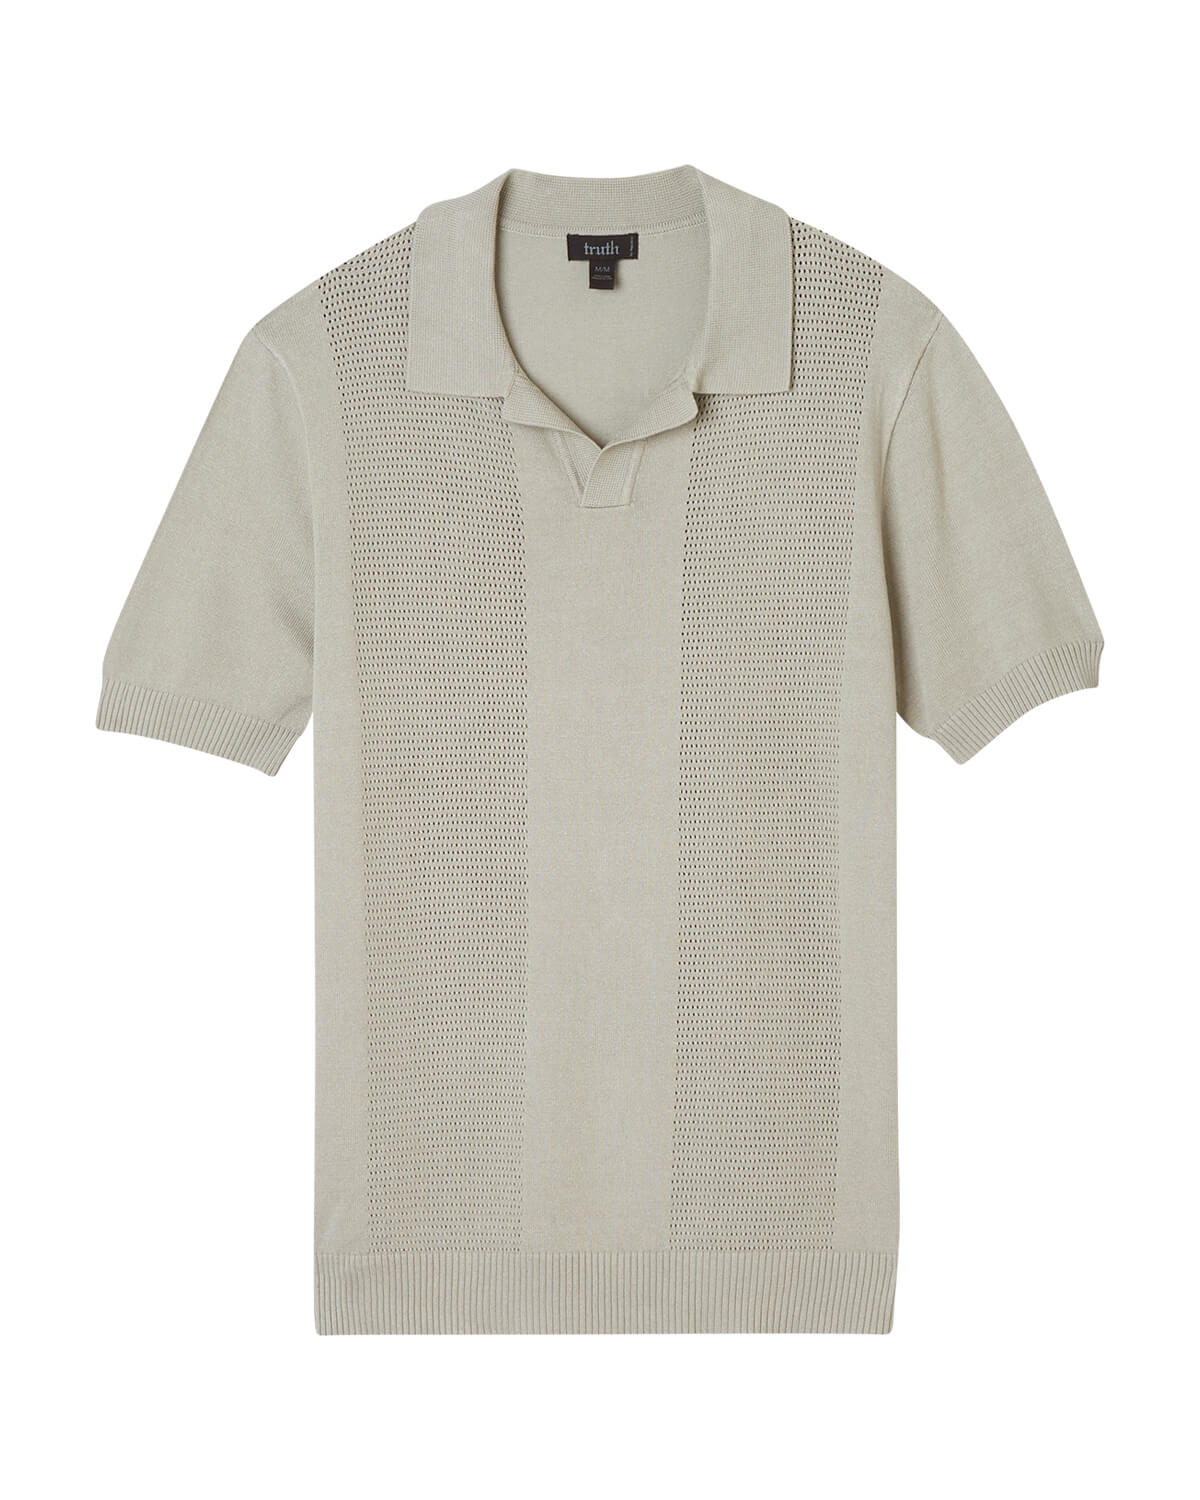 Shop Men's Pointelle Jersey Sweater Polo | Truth Men's | JANE + MERCER